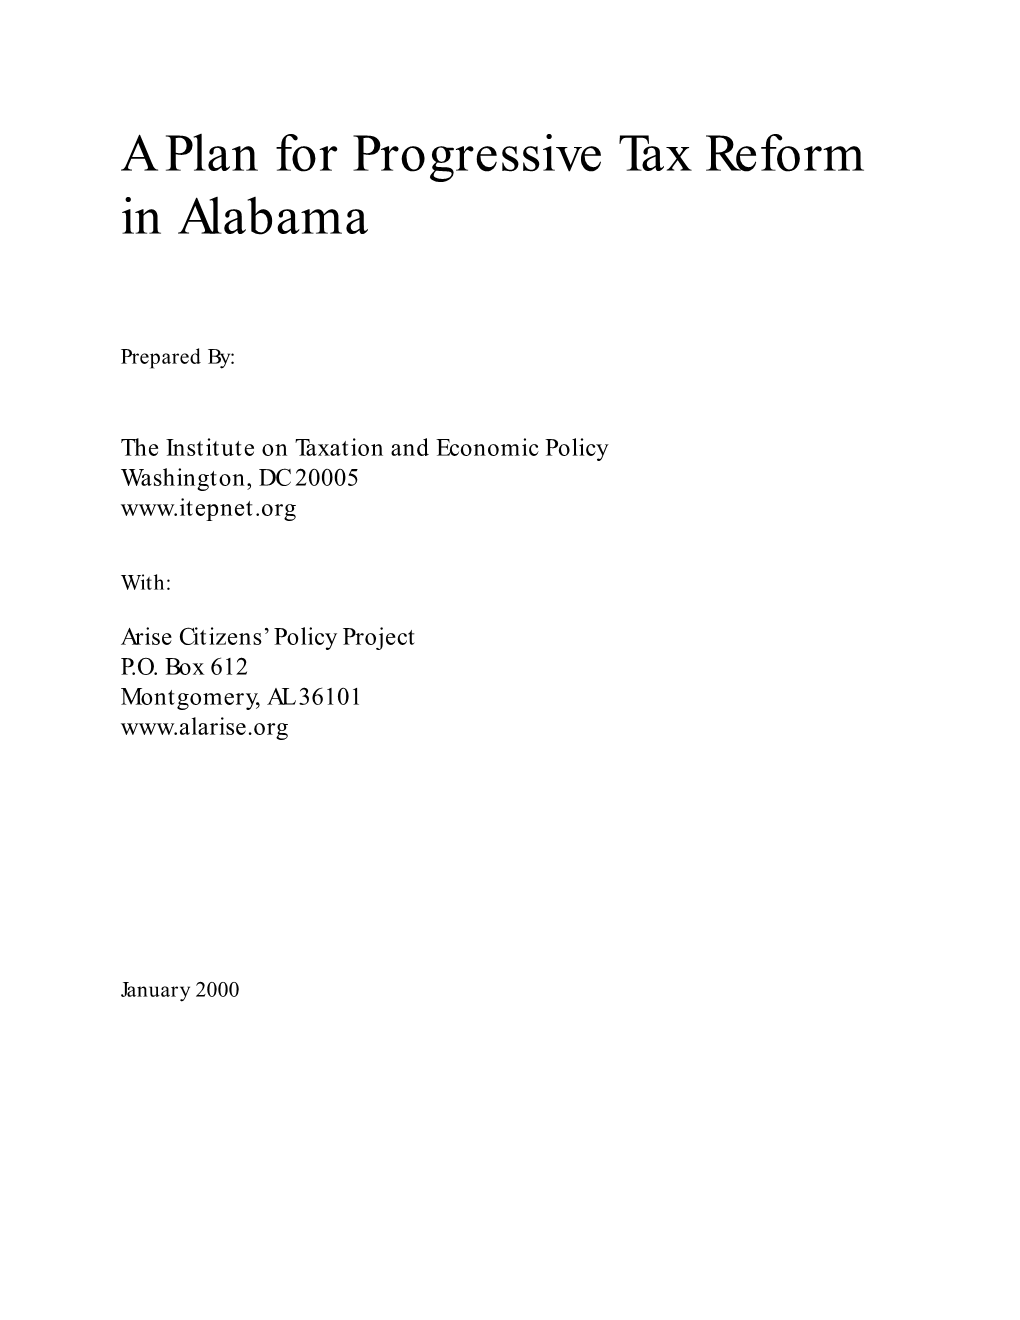 A Plan for Progressive Tax Reform in Alabama